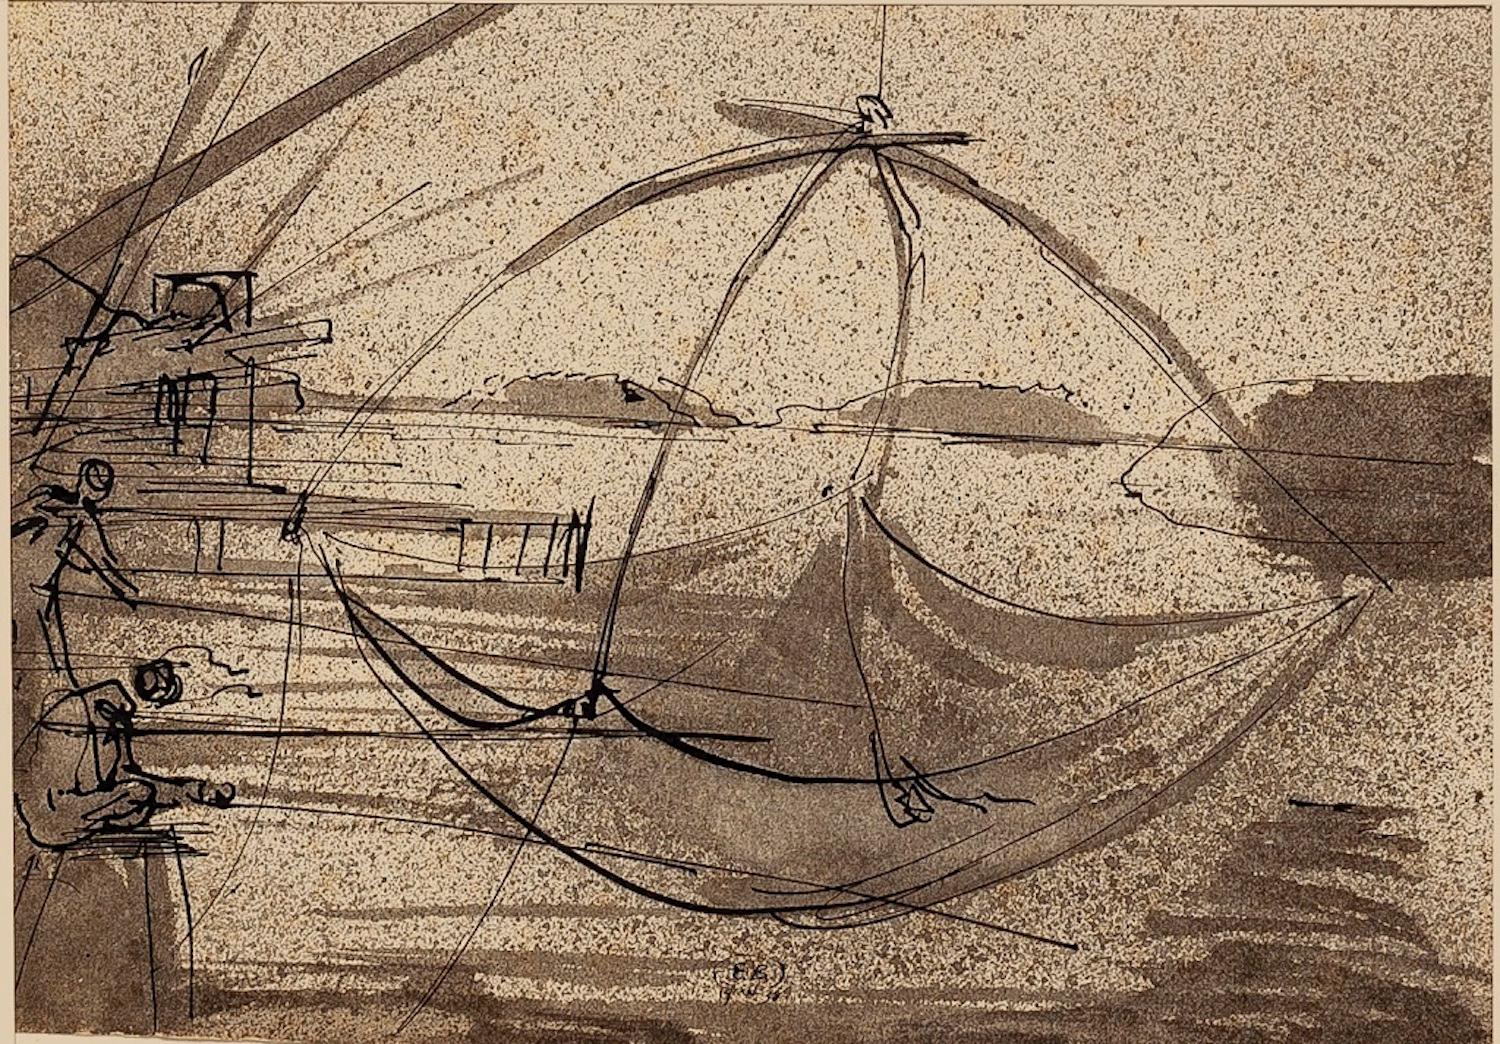 Eugene Berman Abstract Drawing - The Fishing - Original China Ink Drawing by E. Berman - 1938